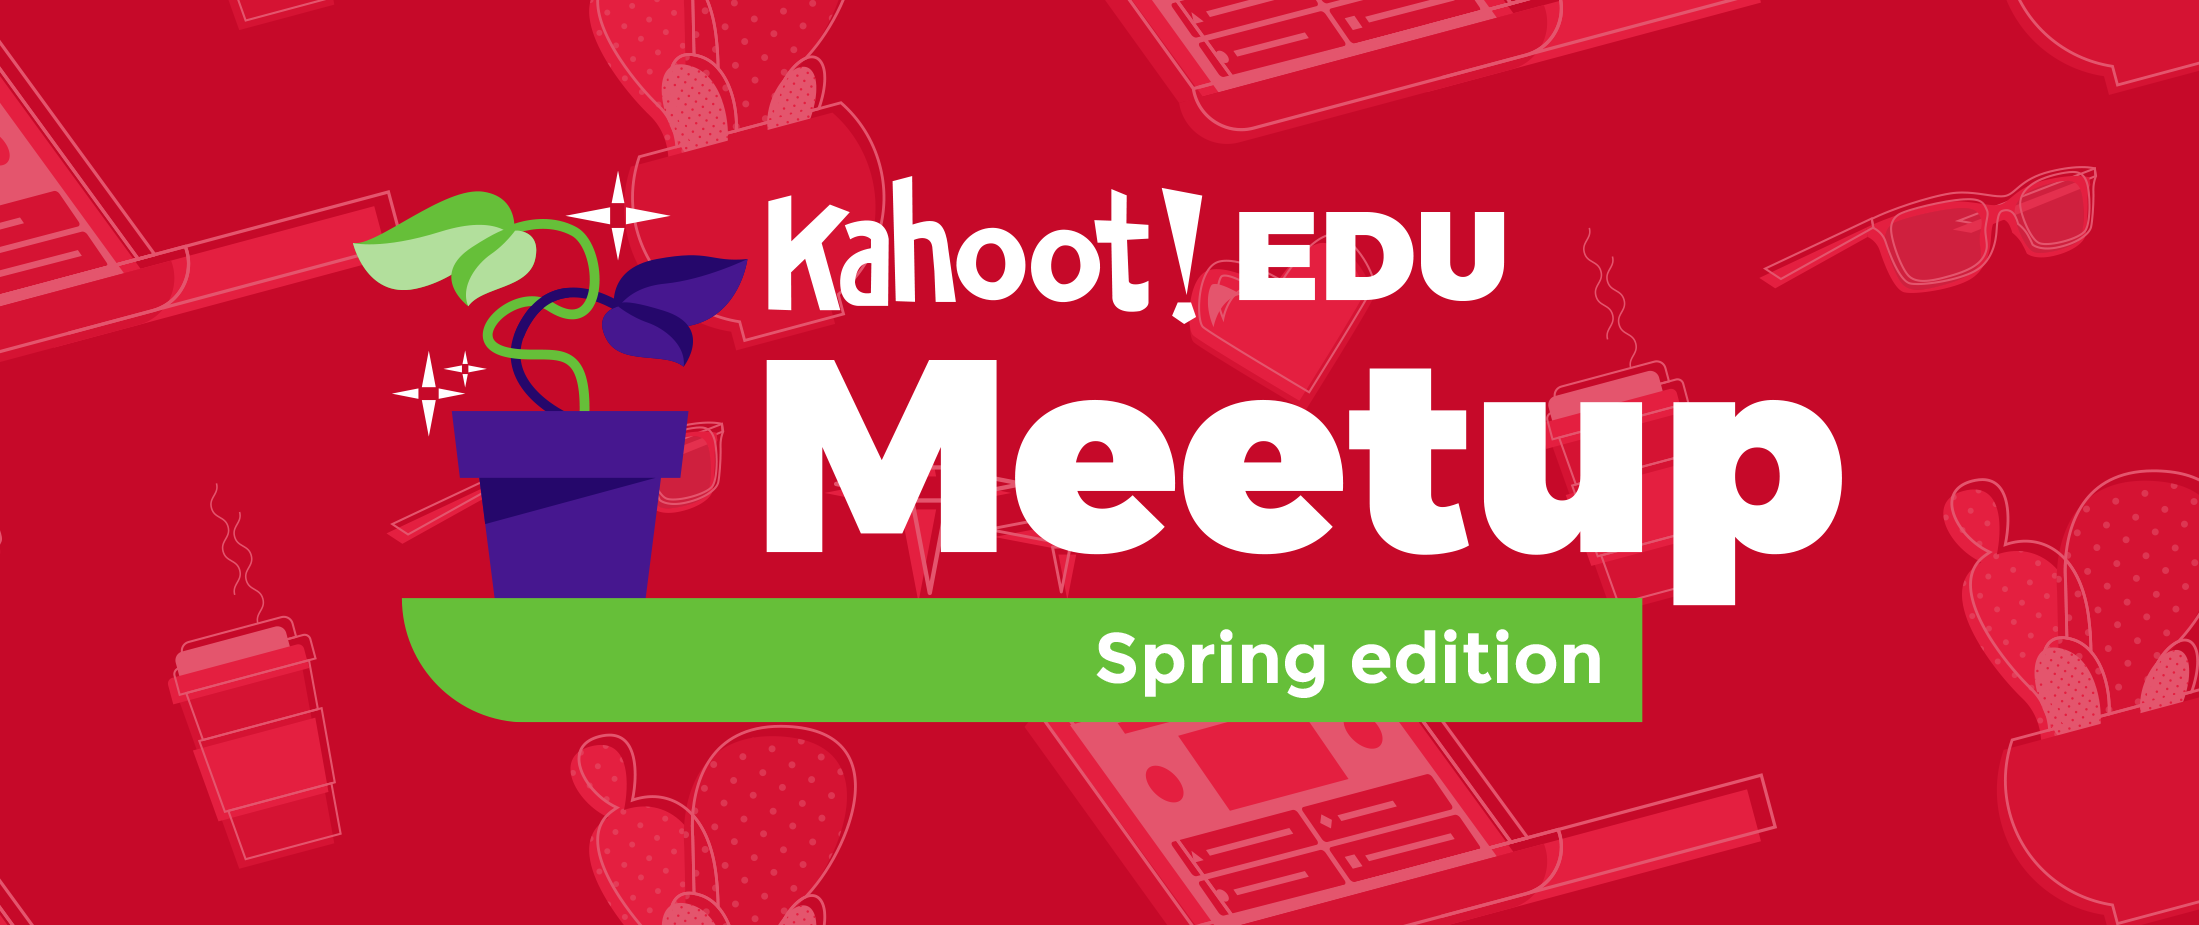 Kahoot! EDU Meetup: Spring edition logo